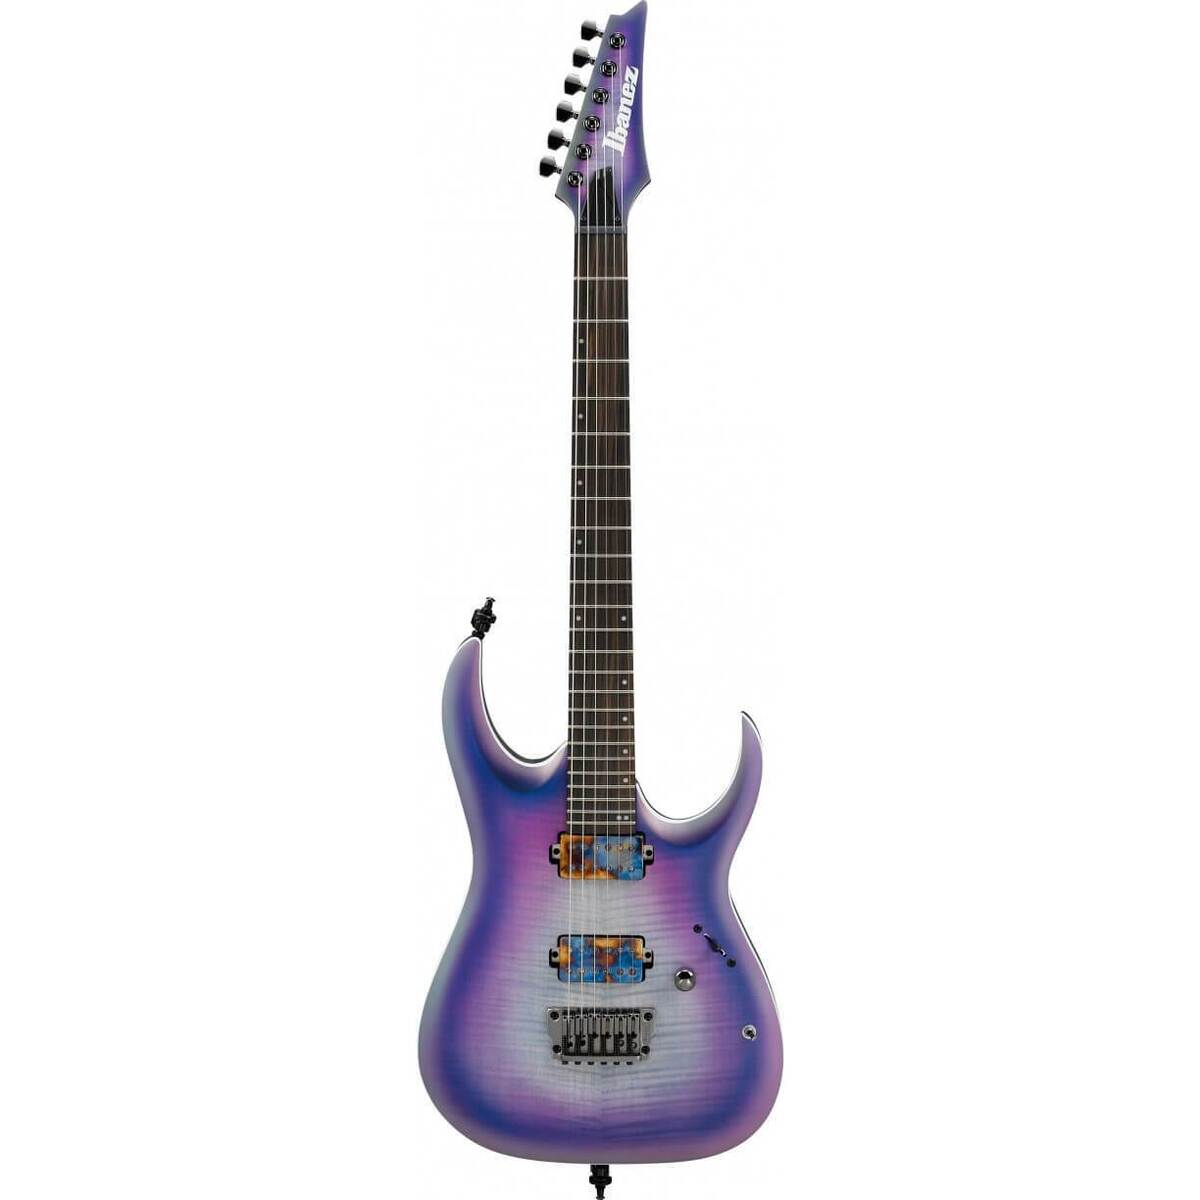 Ibanez RGA61AL Axion Label Electric Guitar in Indigo Aurora Burst Flat ...